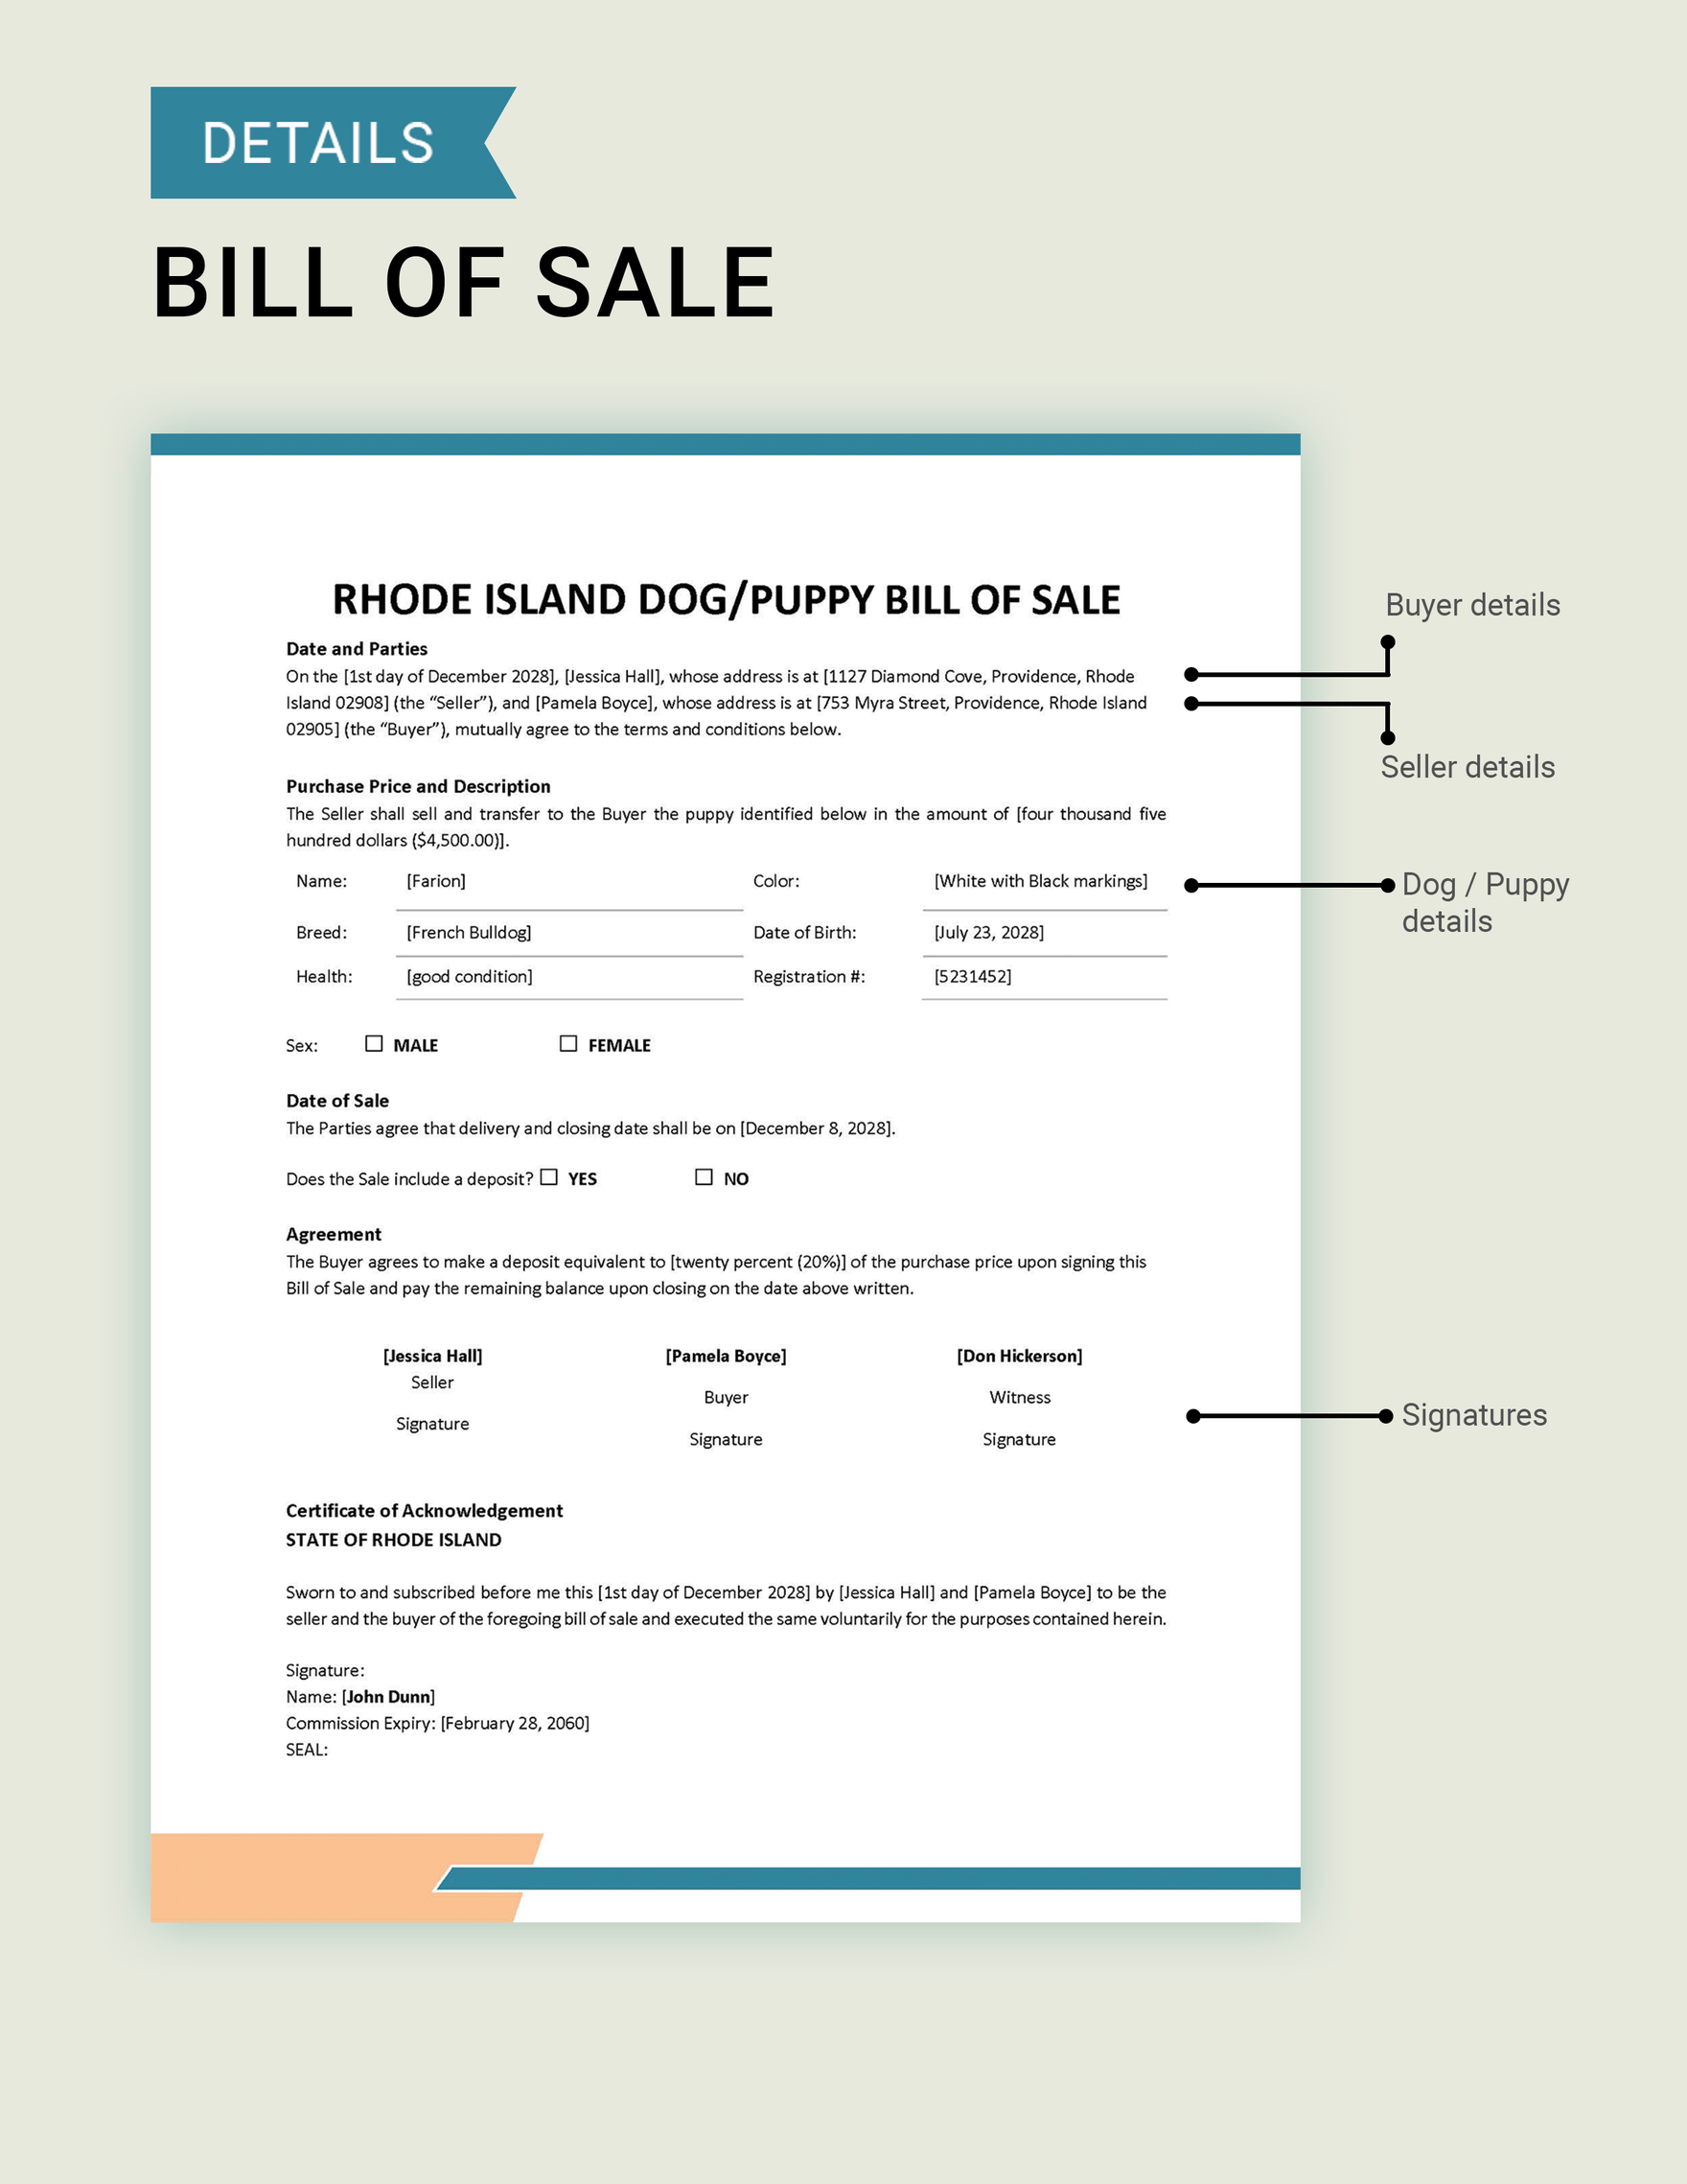 Rhode Island Dog / Puppy Bill of Sale Template